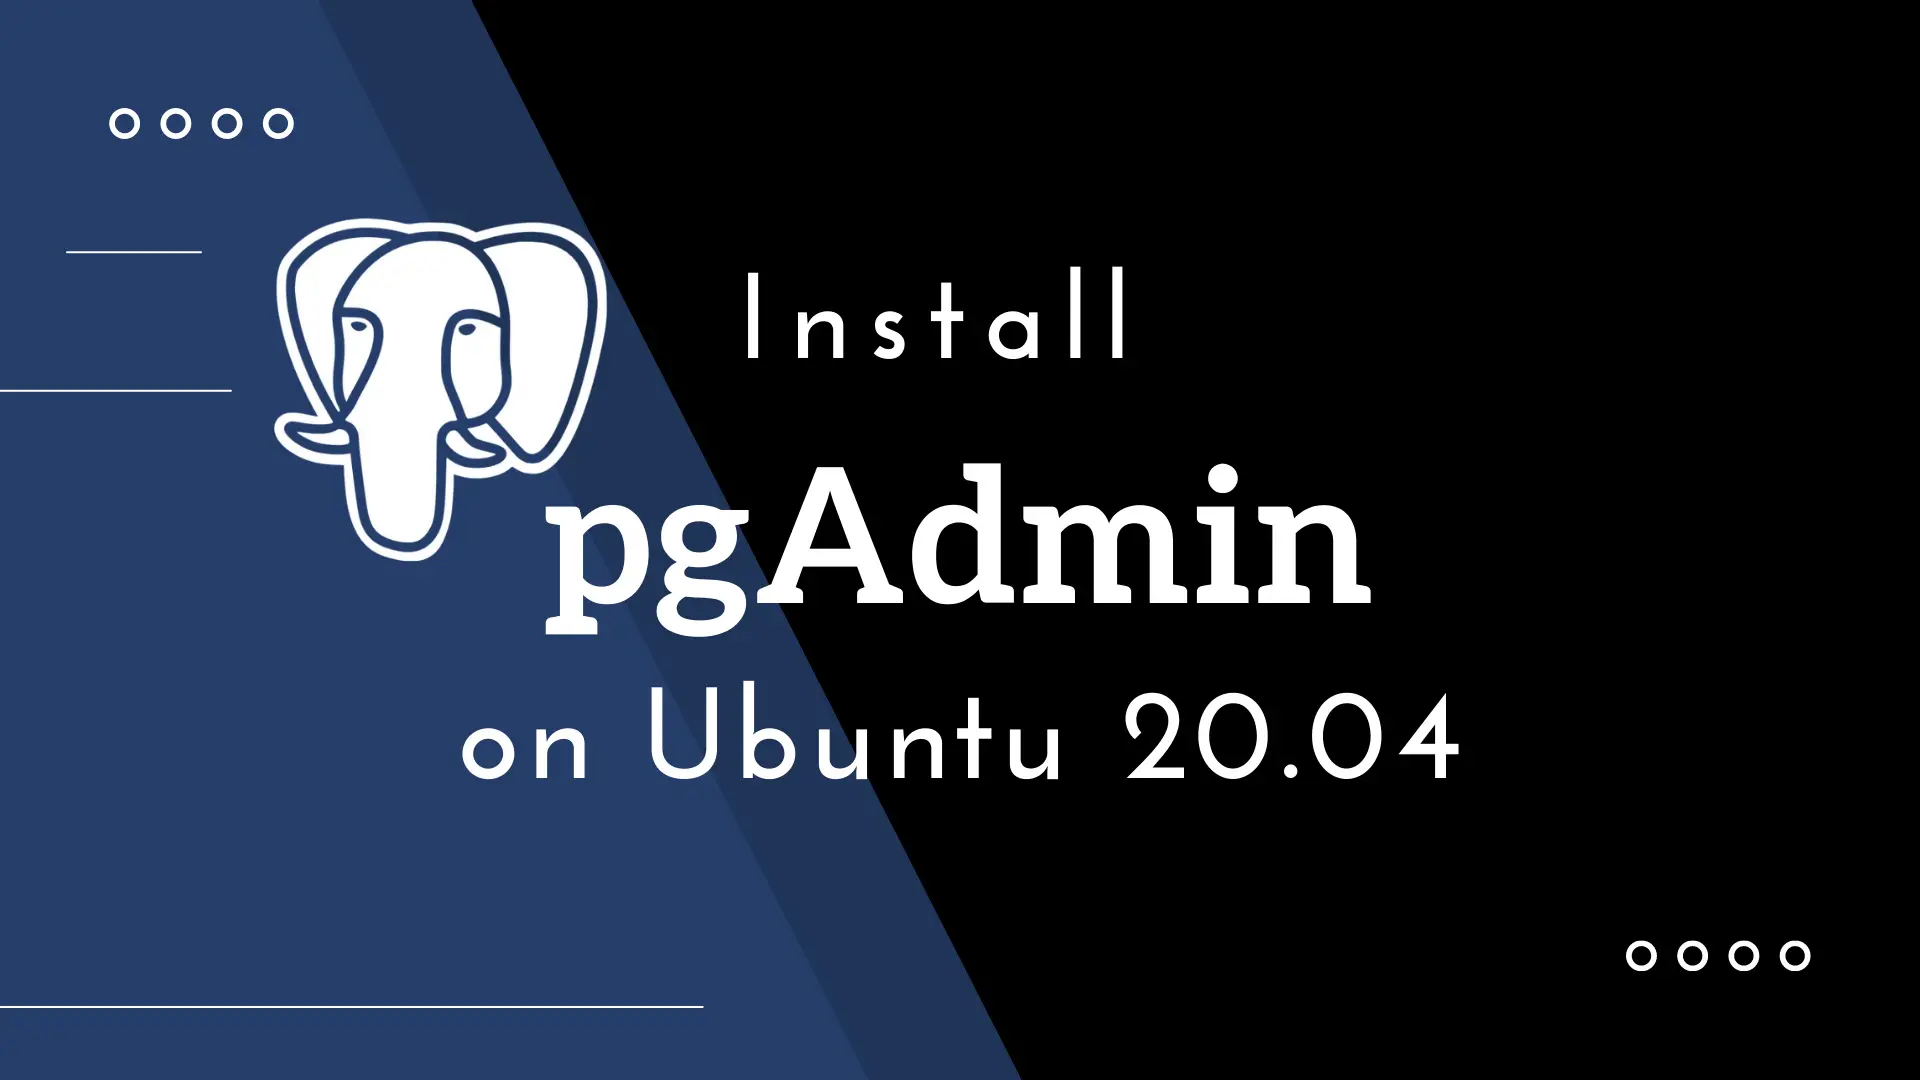 Install pgAdmin on Ubuntu 22.04